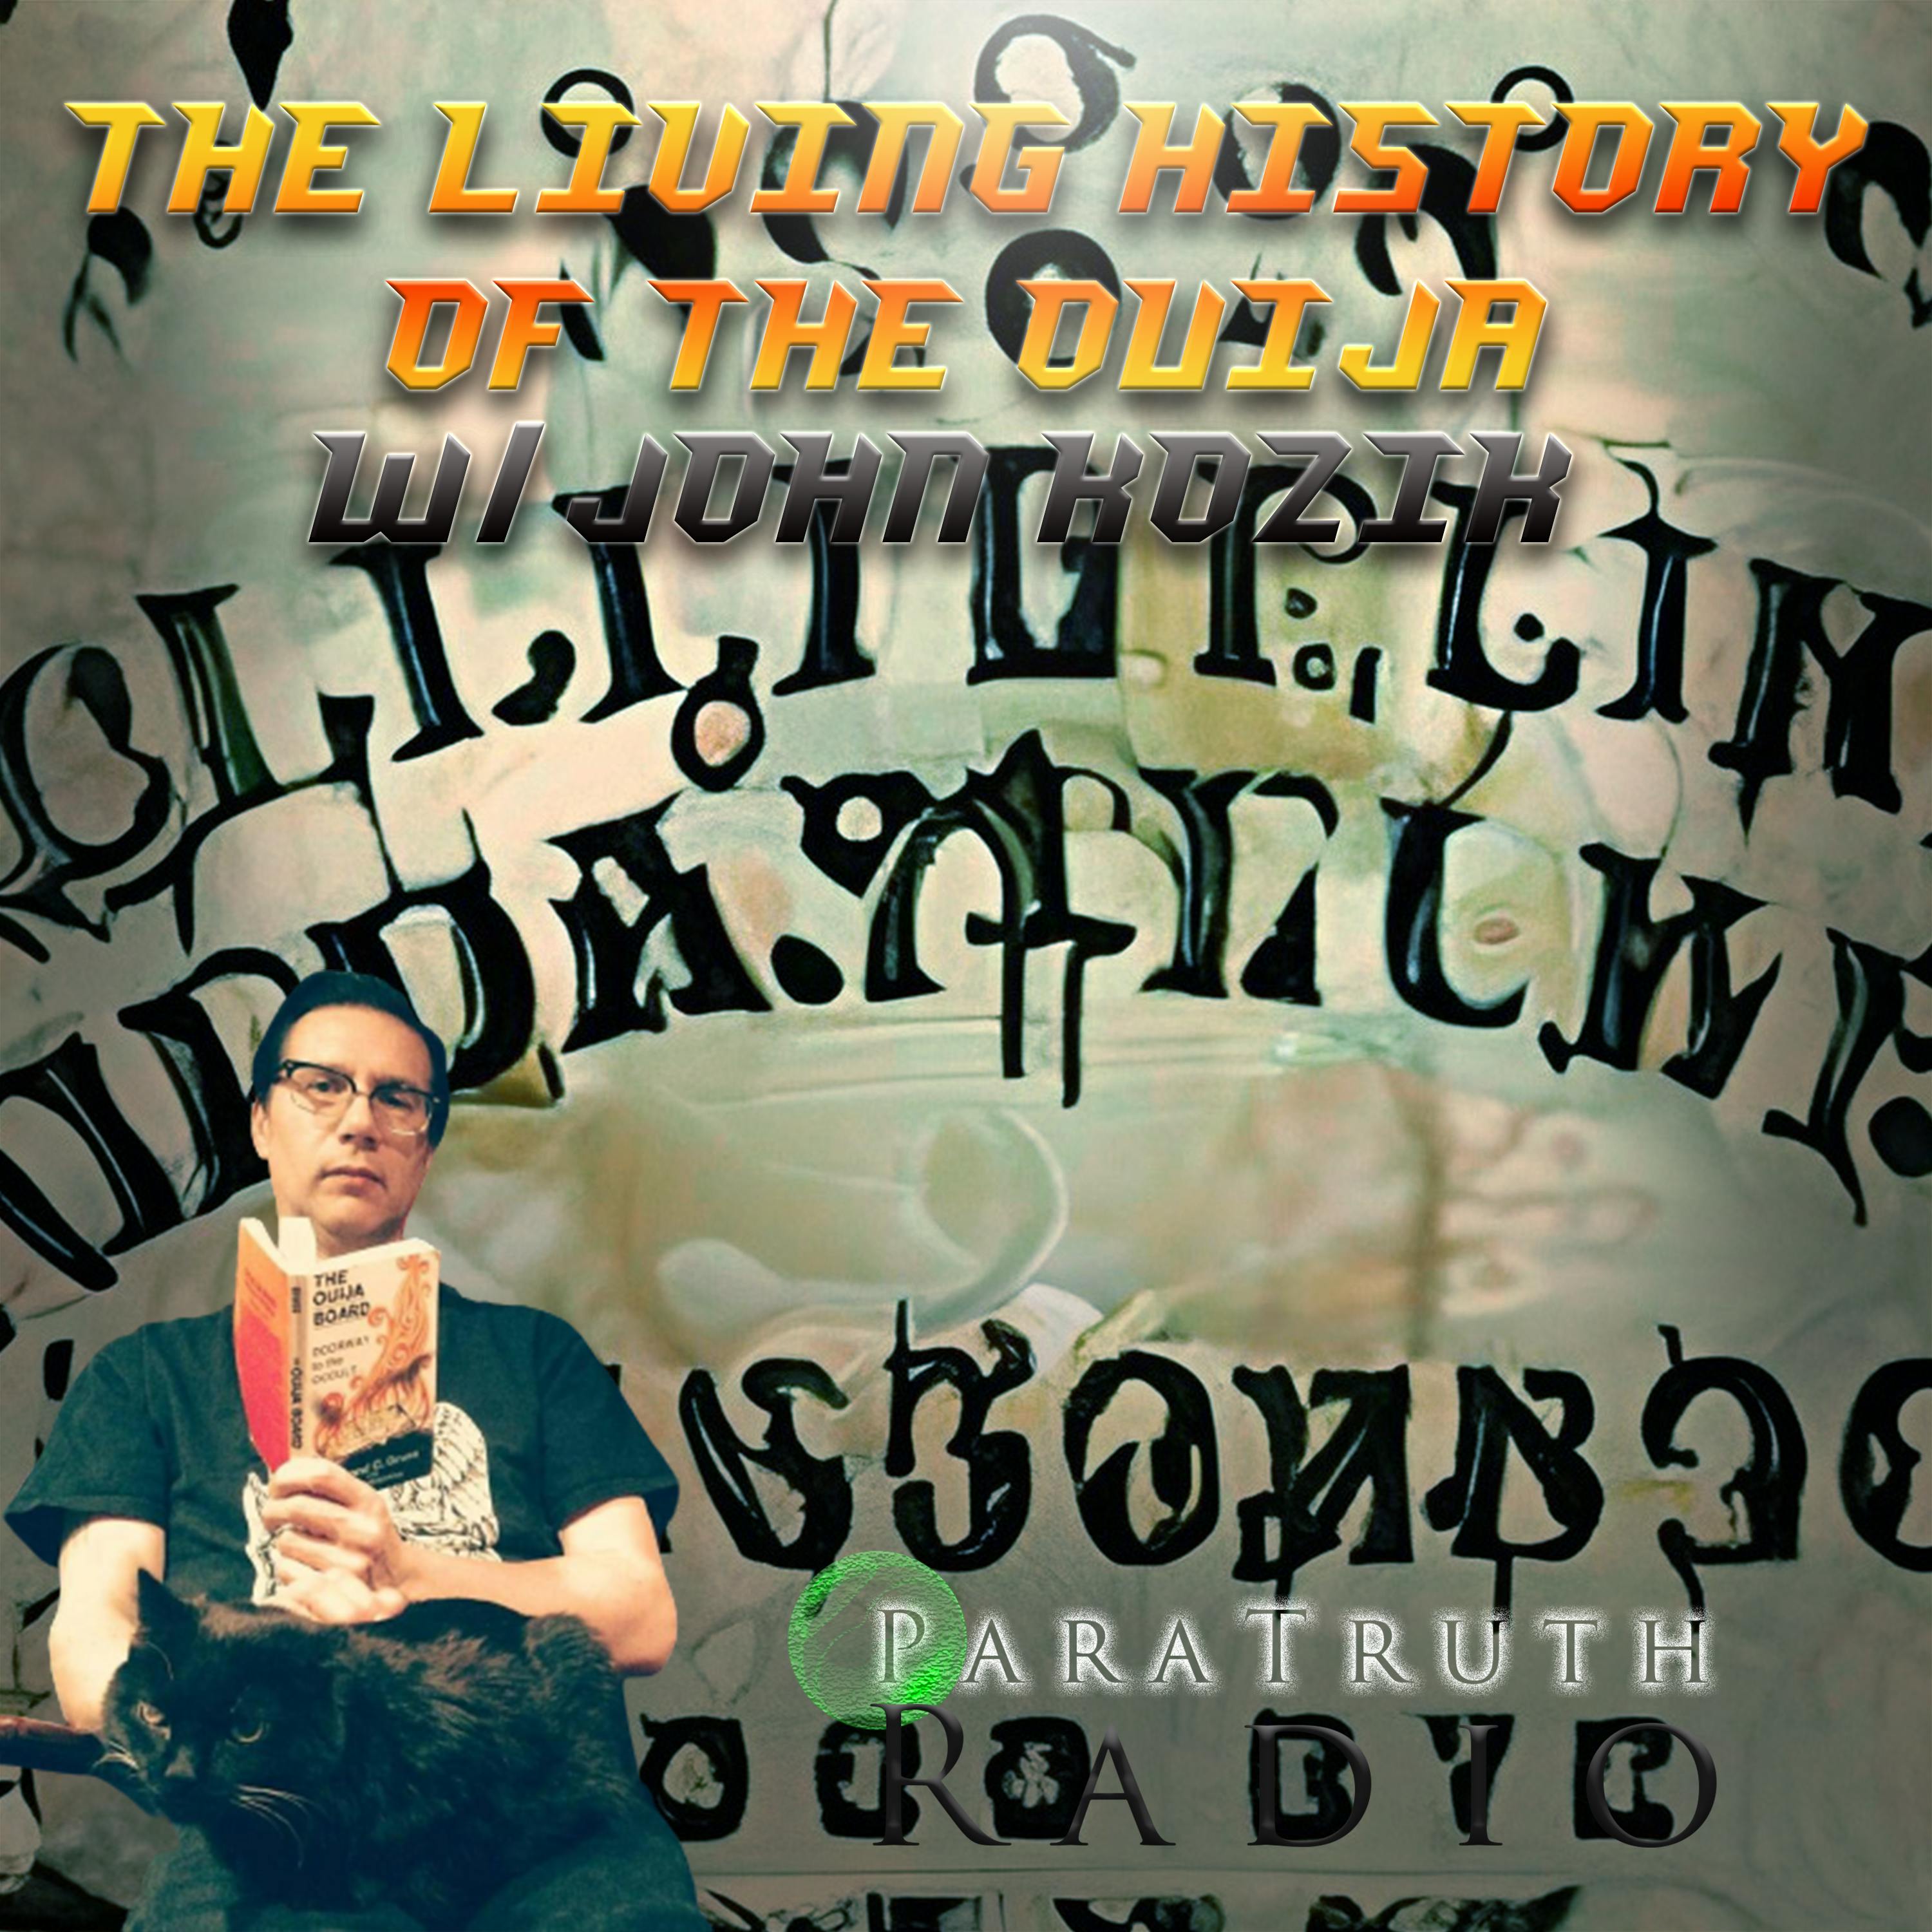 The Living History of the Ouija w/John Kozik